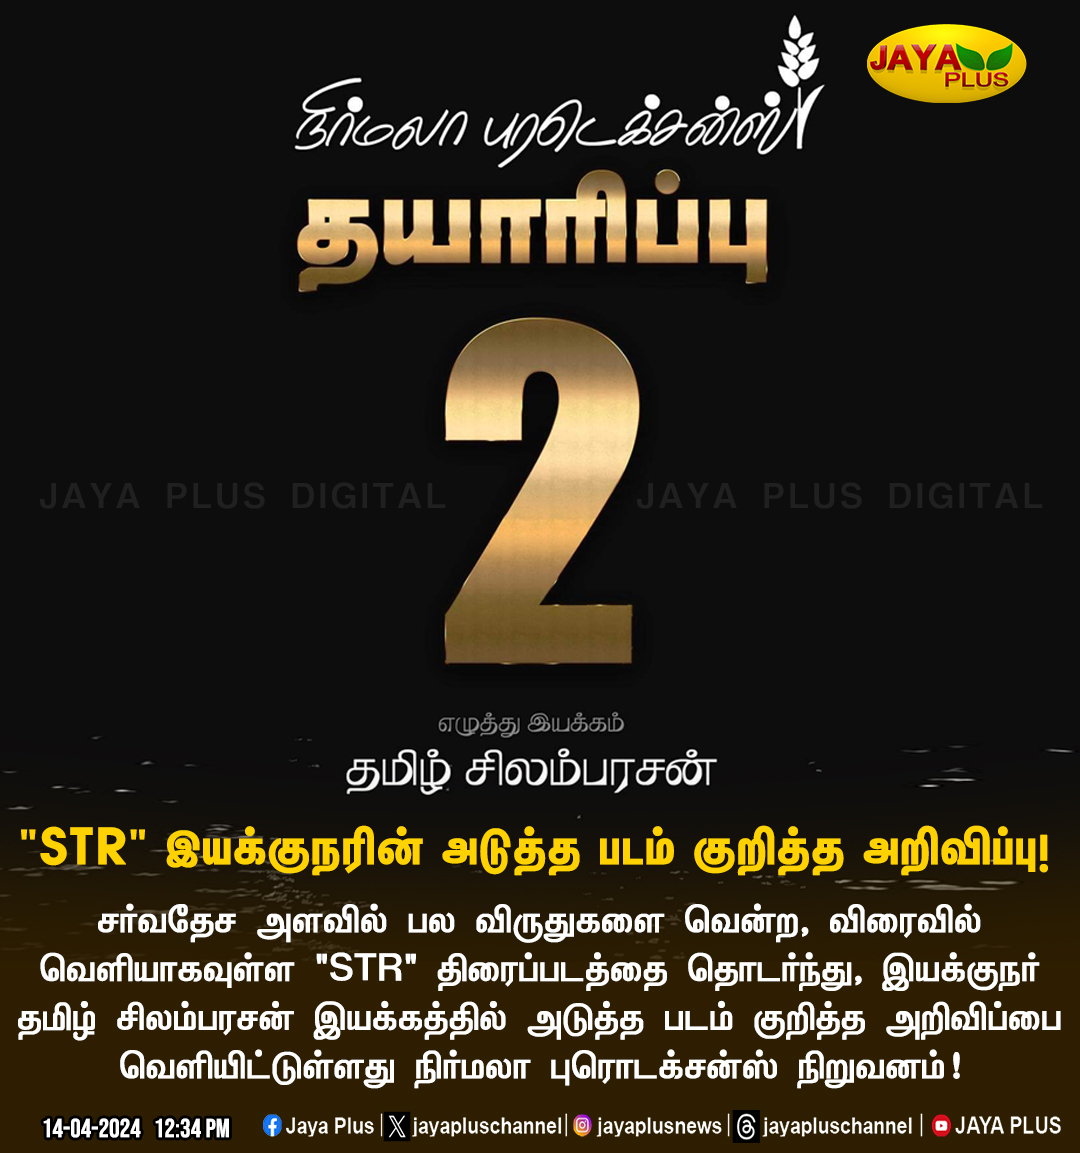 'STR' இயக்குநரின் அடுத்த படம் குறித்த அறிவிப்பு!

#STR #TamilSilambarasan #JayaPlus